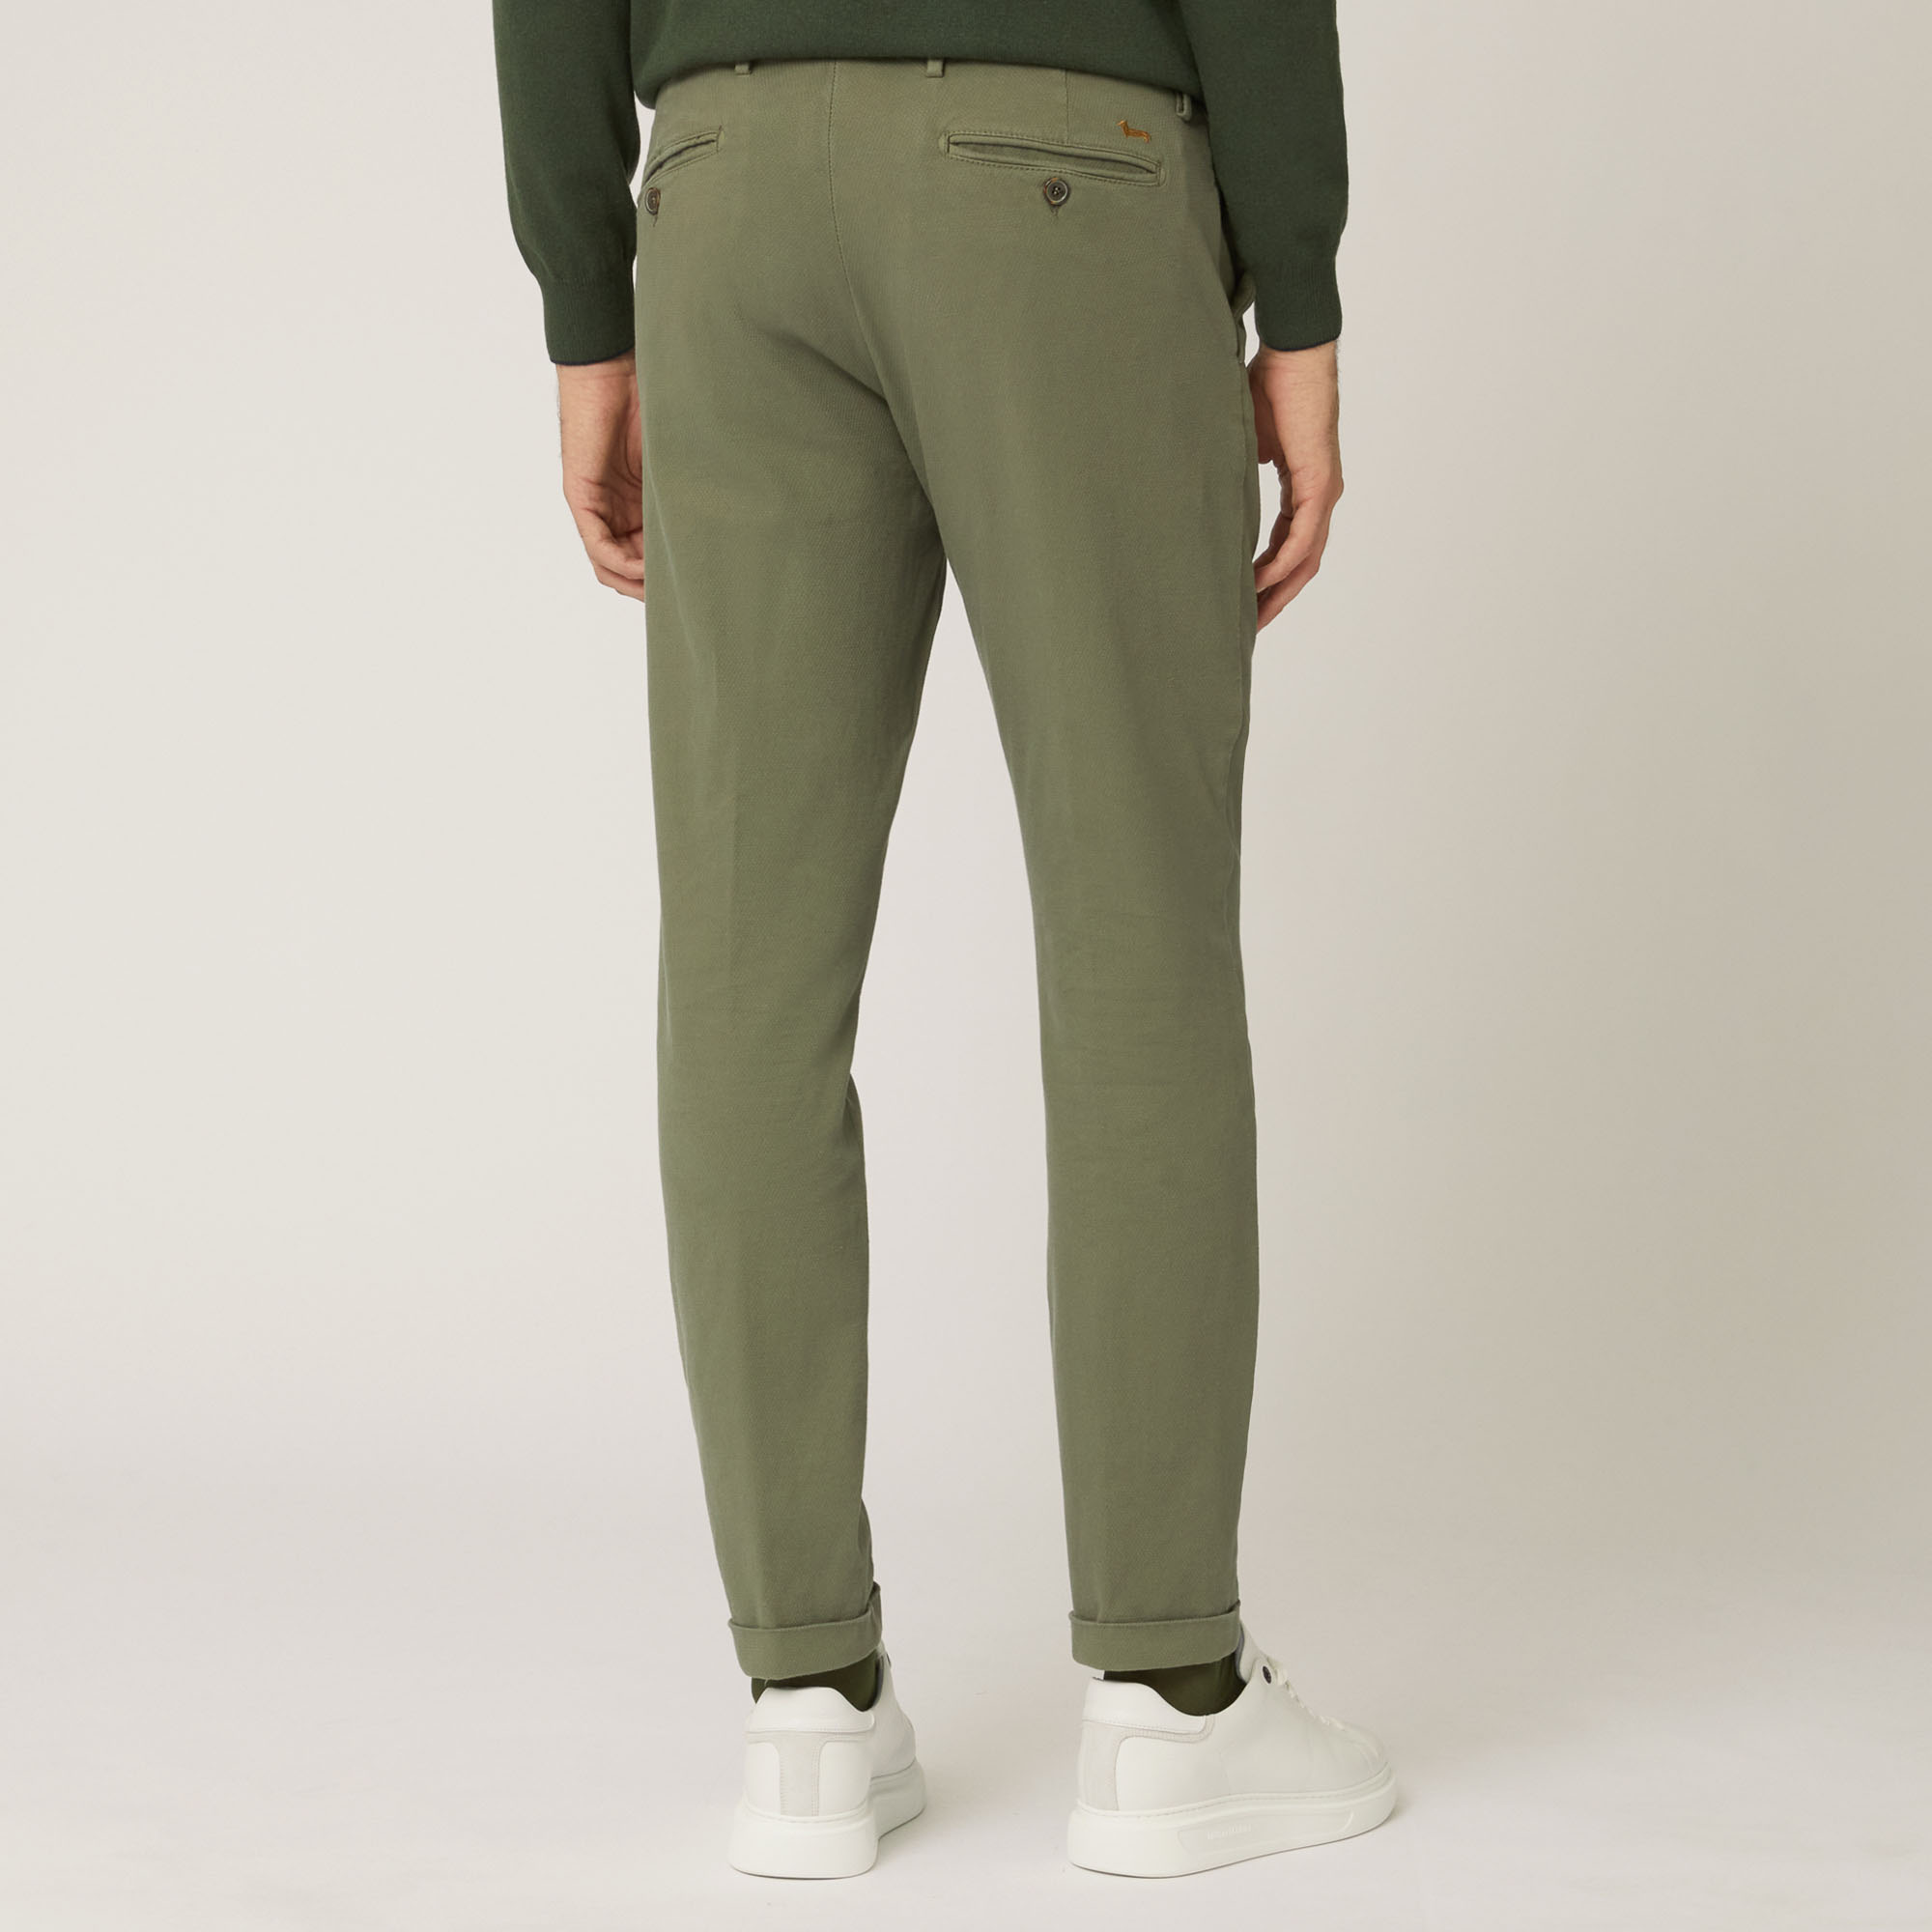 Pantalone In Cotone Stretch, Verde Oliva, large